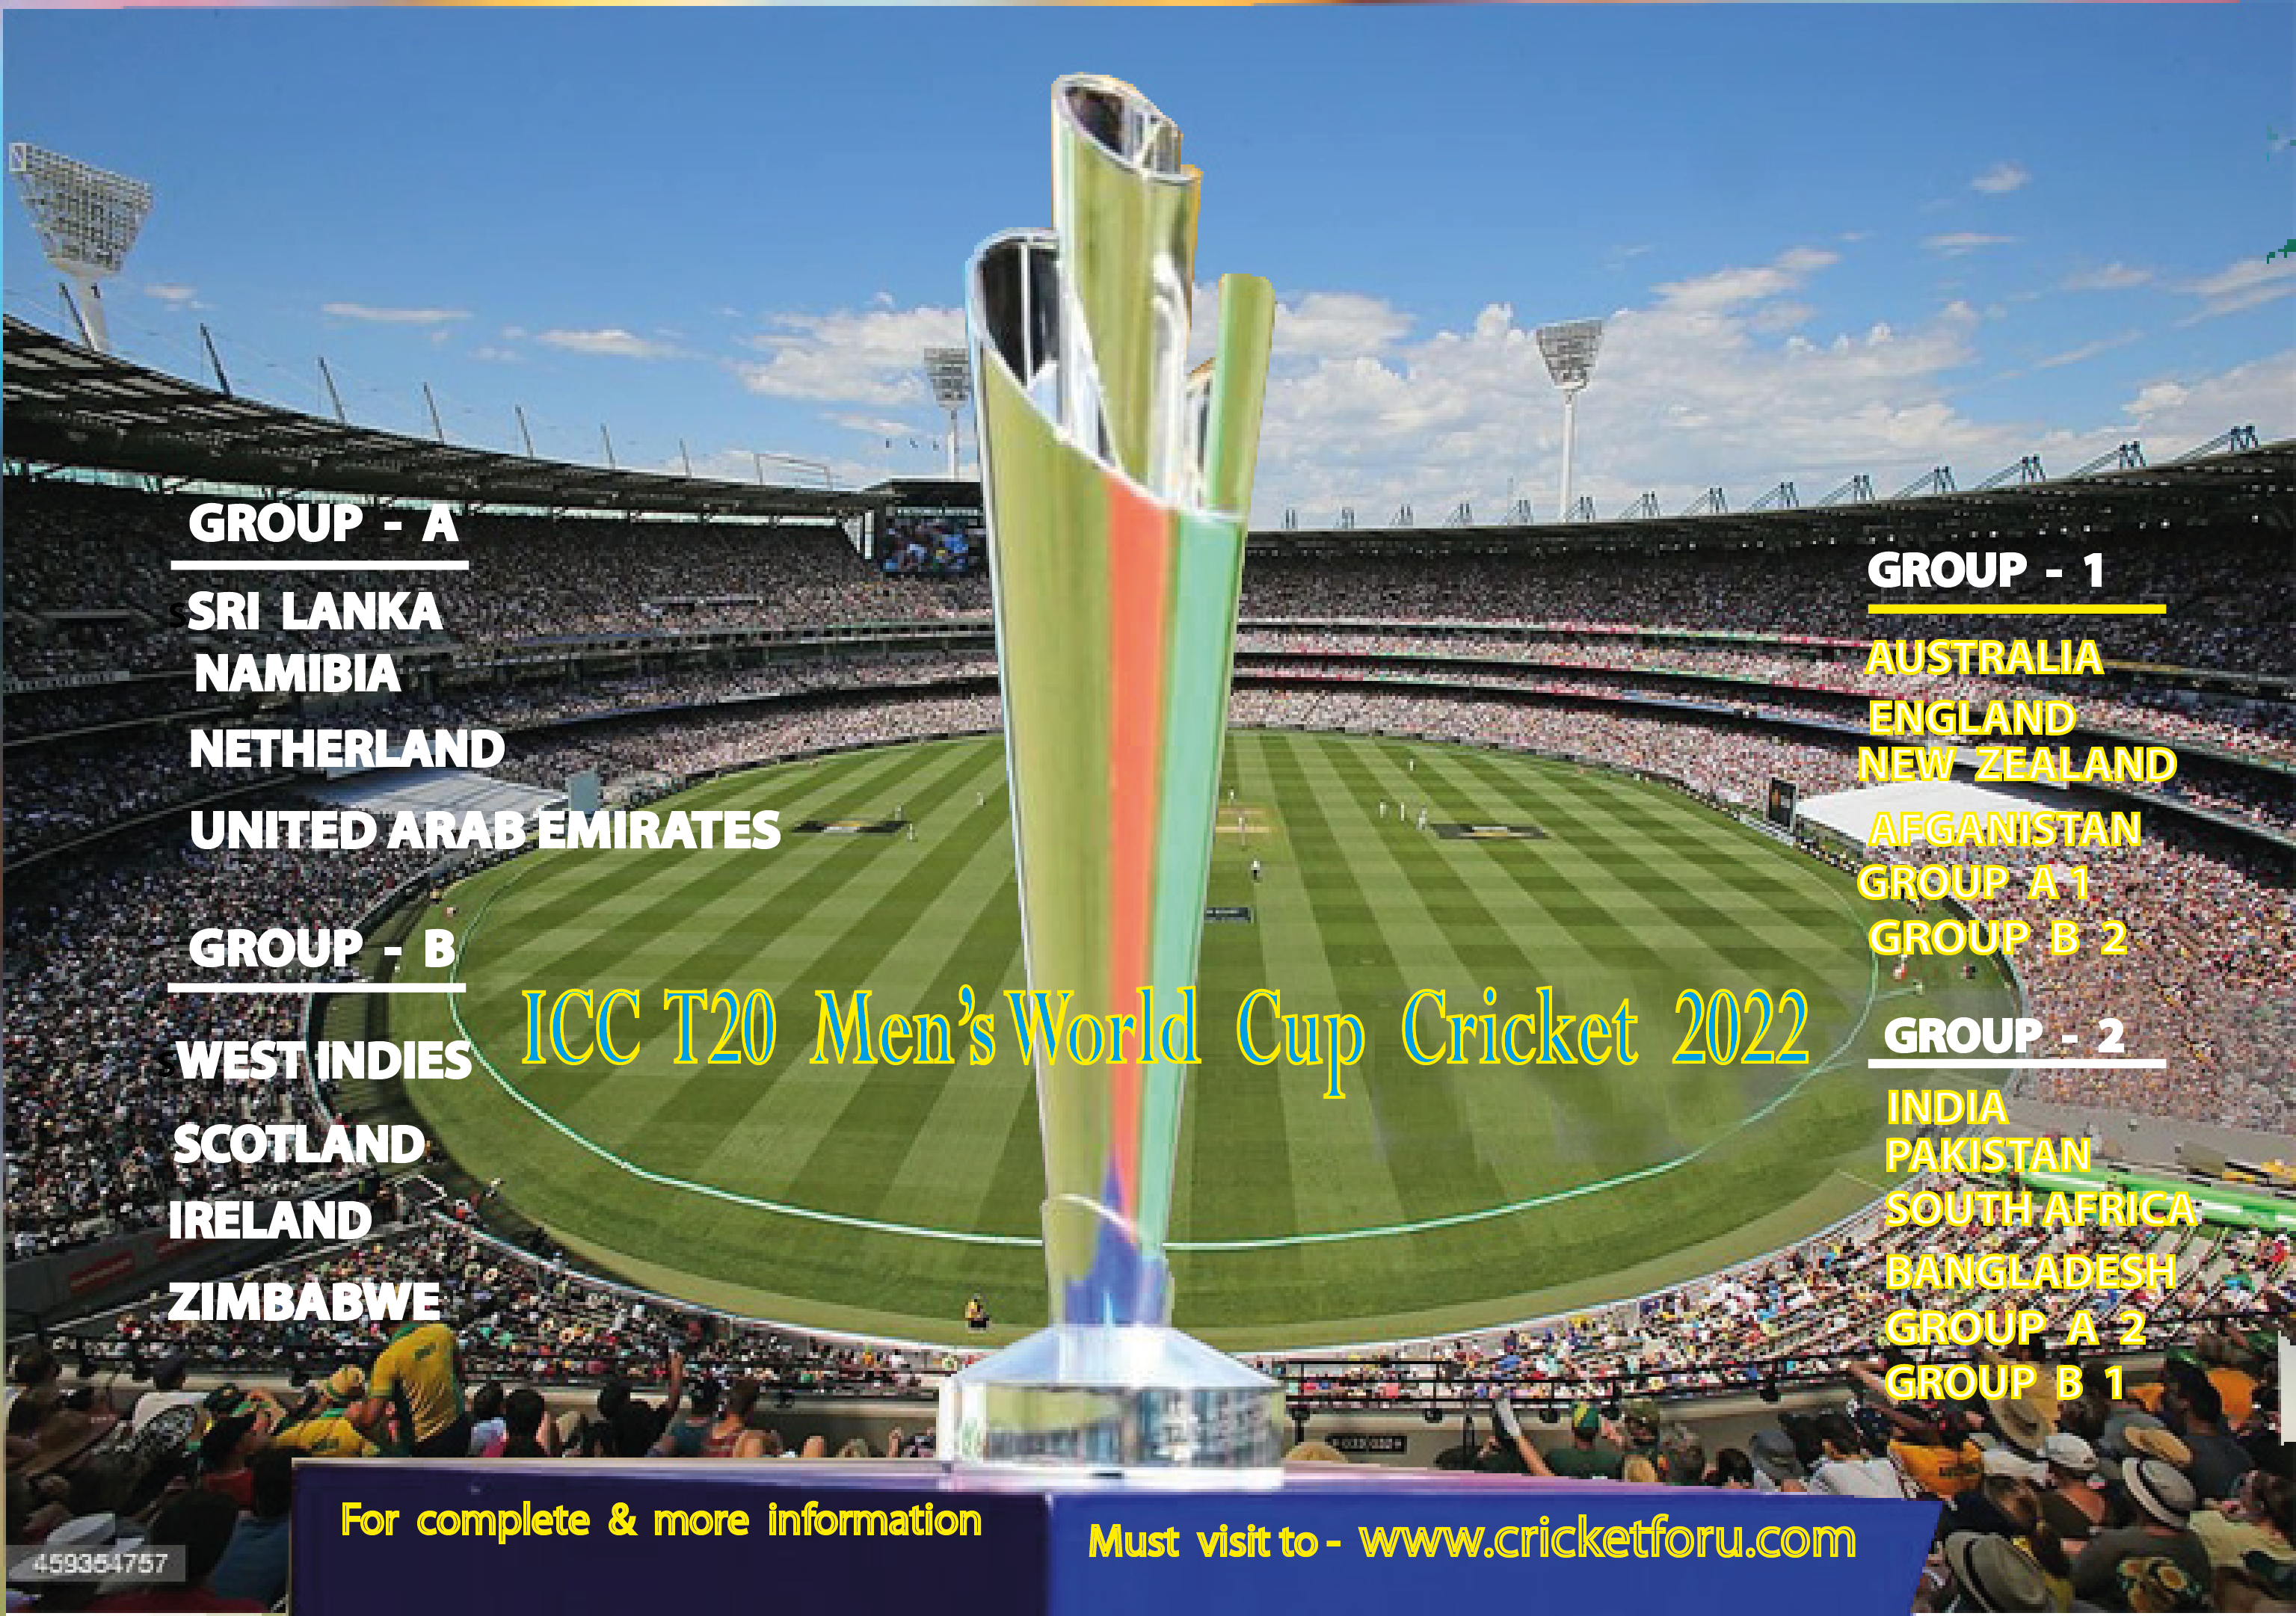 CRICKET ICC T20 MEN'S WORLD CUP 2022